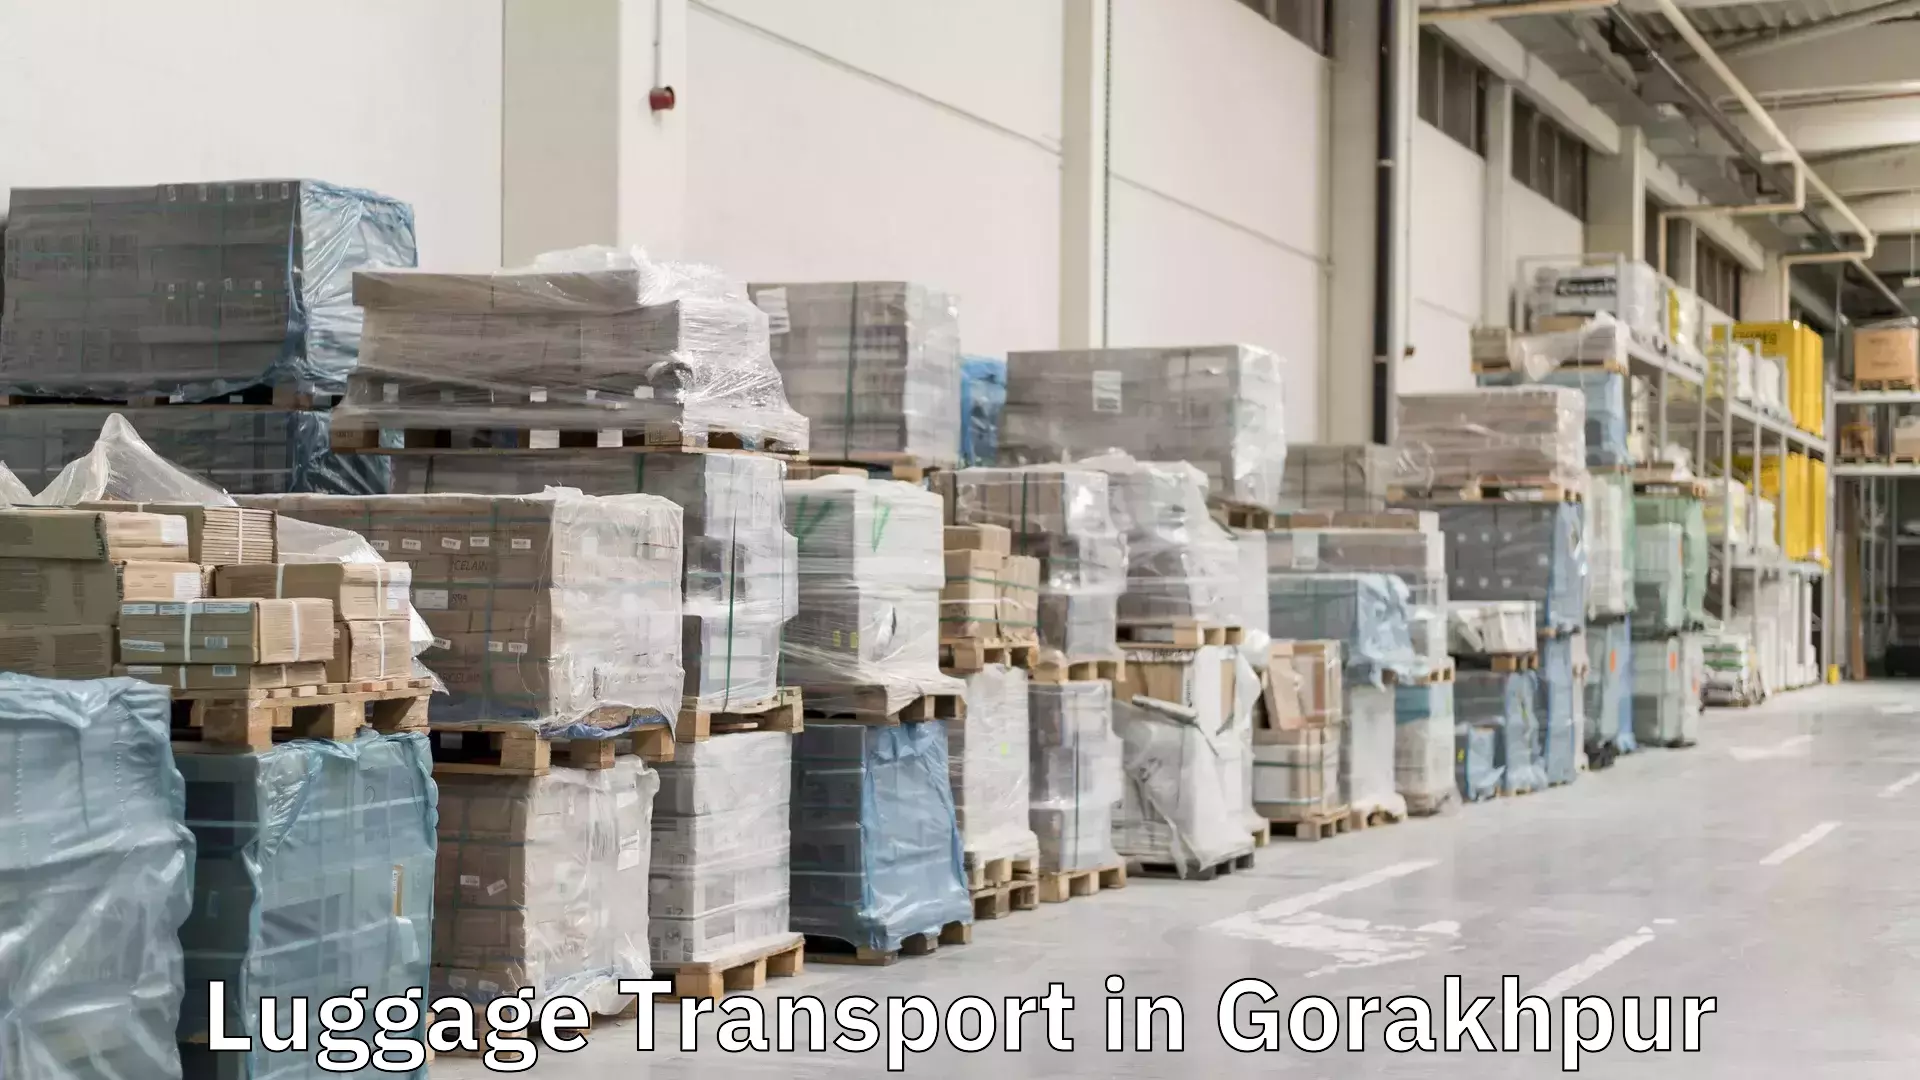 Luggage transit service in Gorakhpur